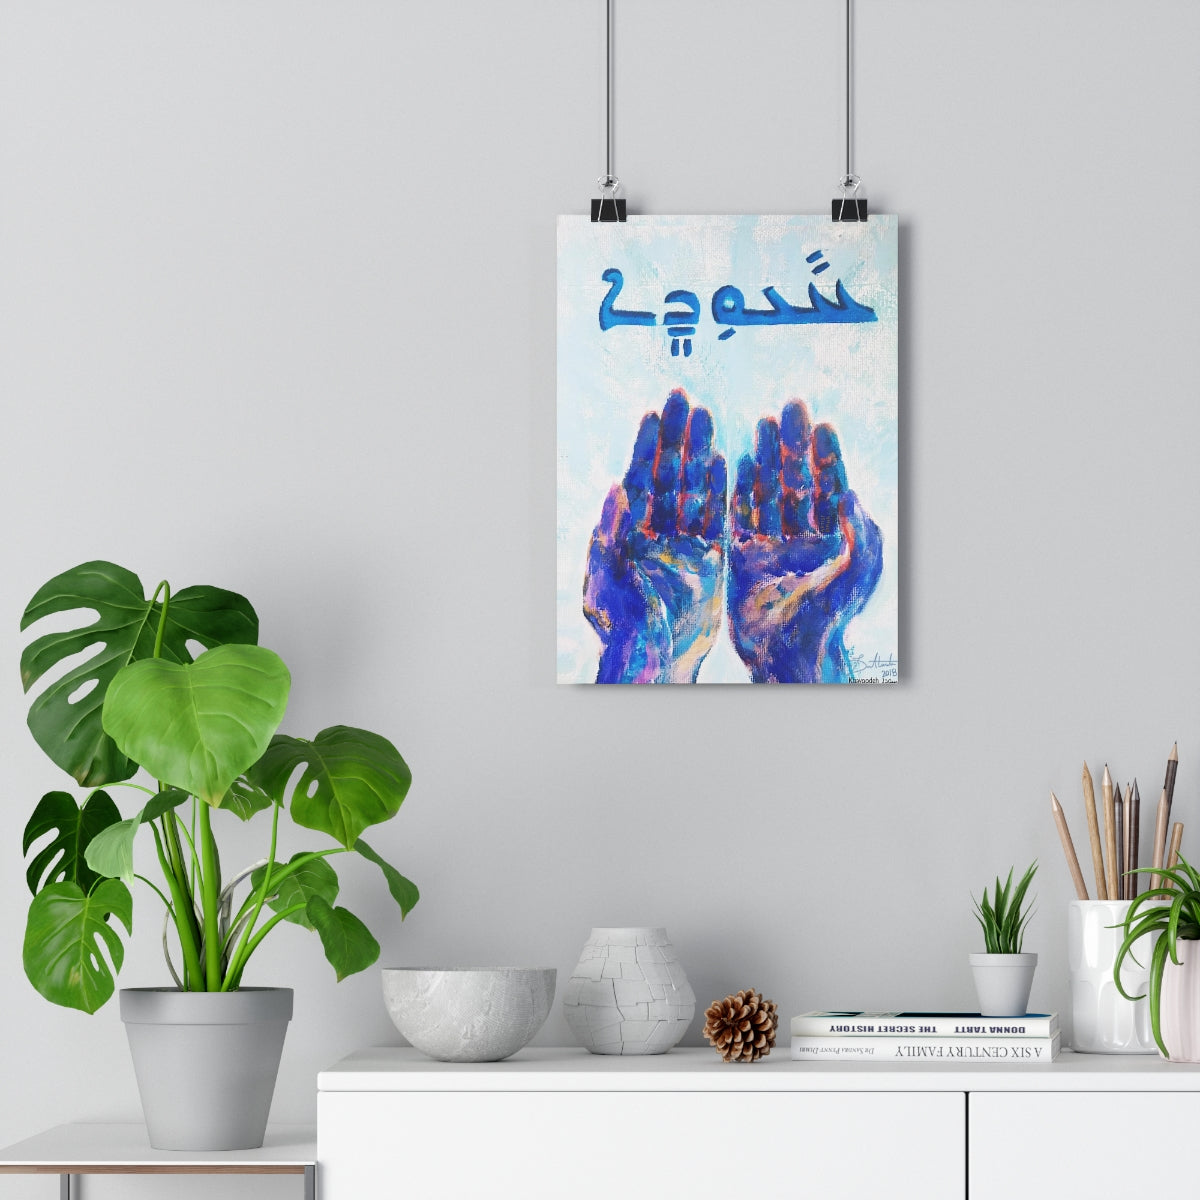 Khayoodeh (Uniting) - Giclée Art Print